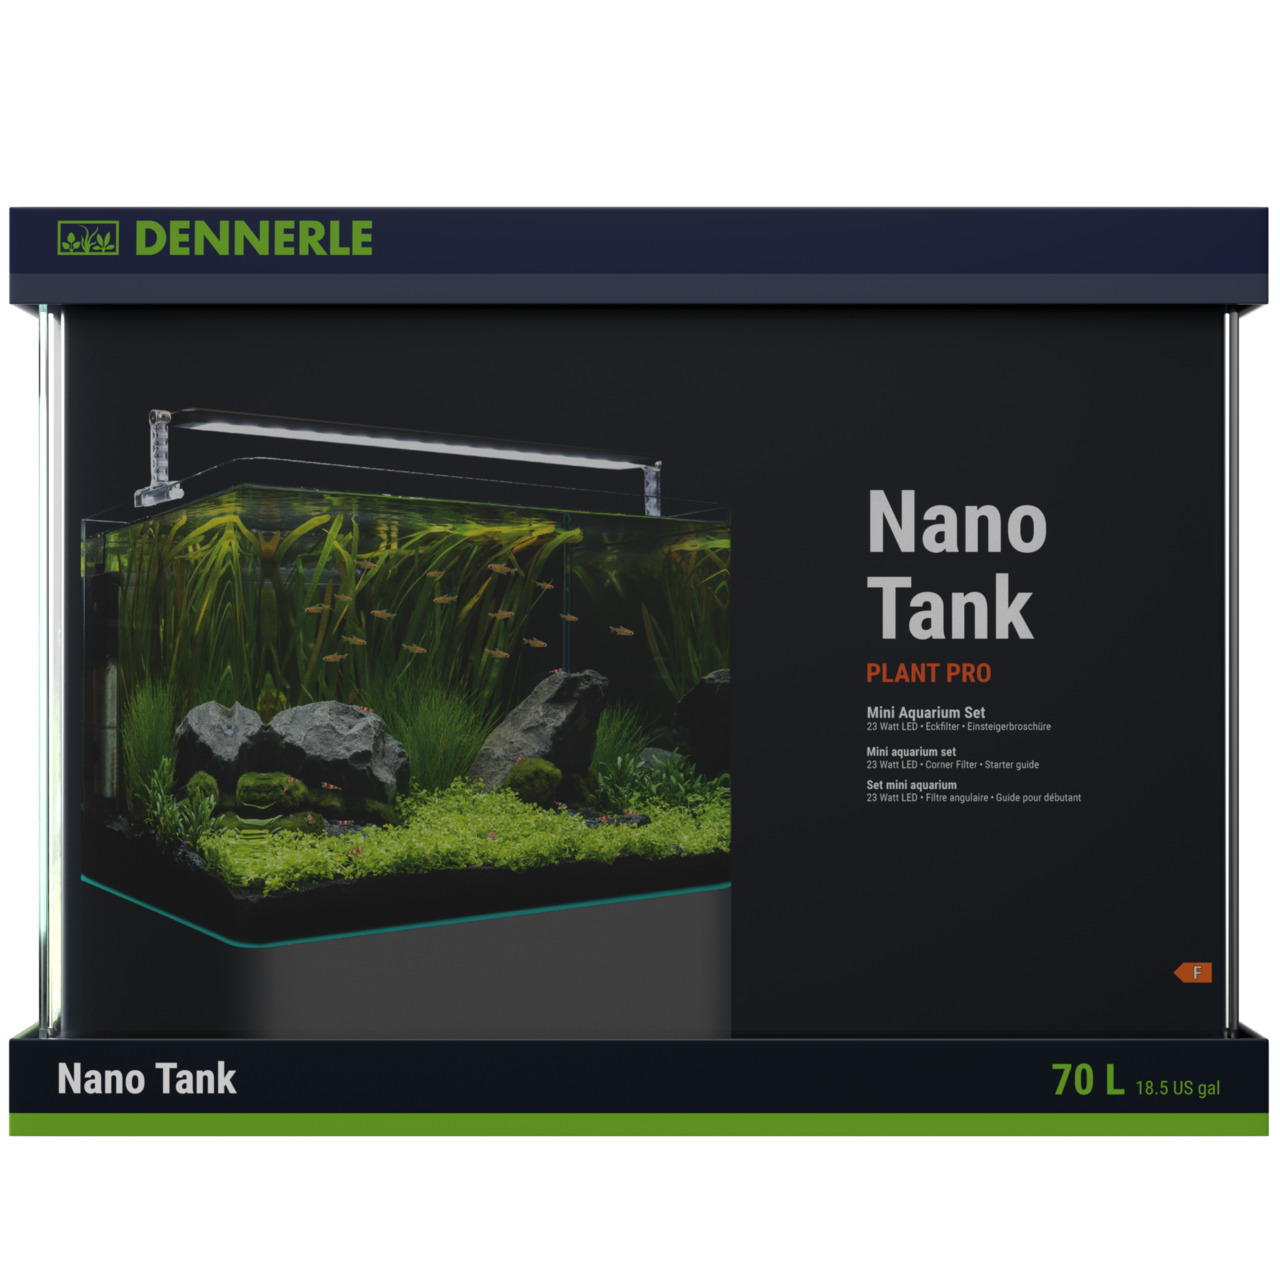 Dennerle Nano Tank PLANT PRO Aquarium Komplettset 70 l